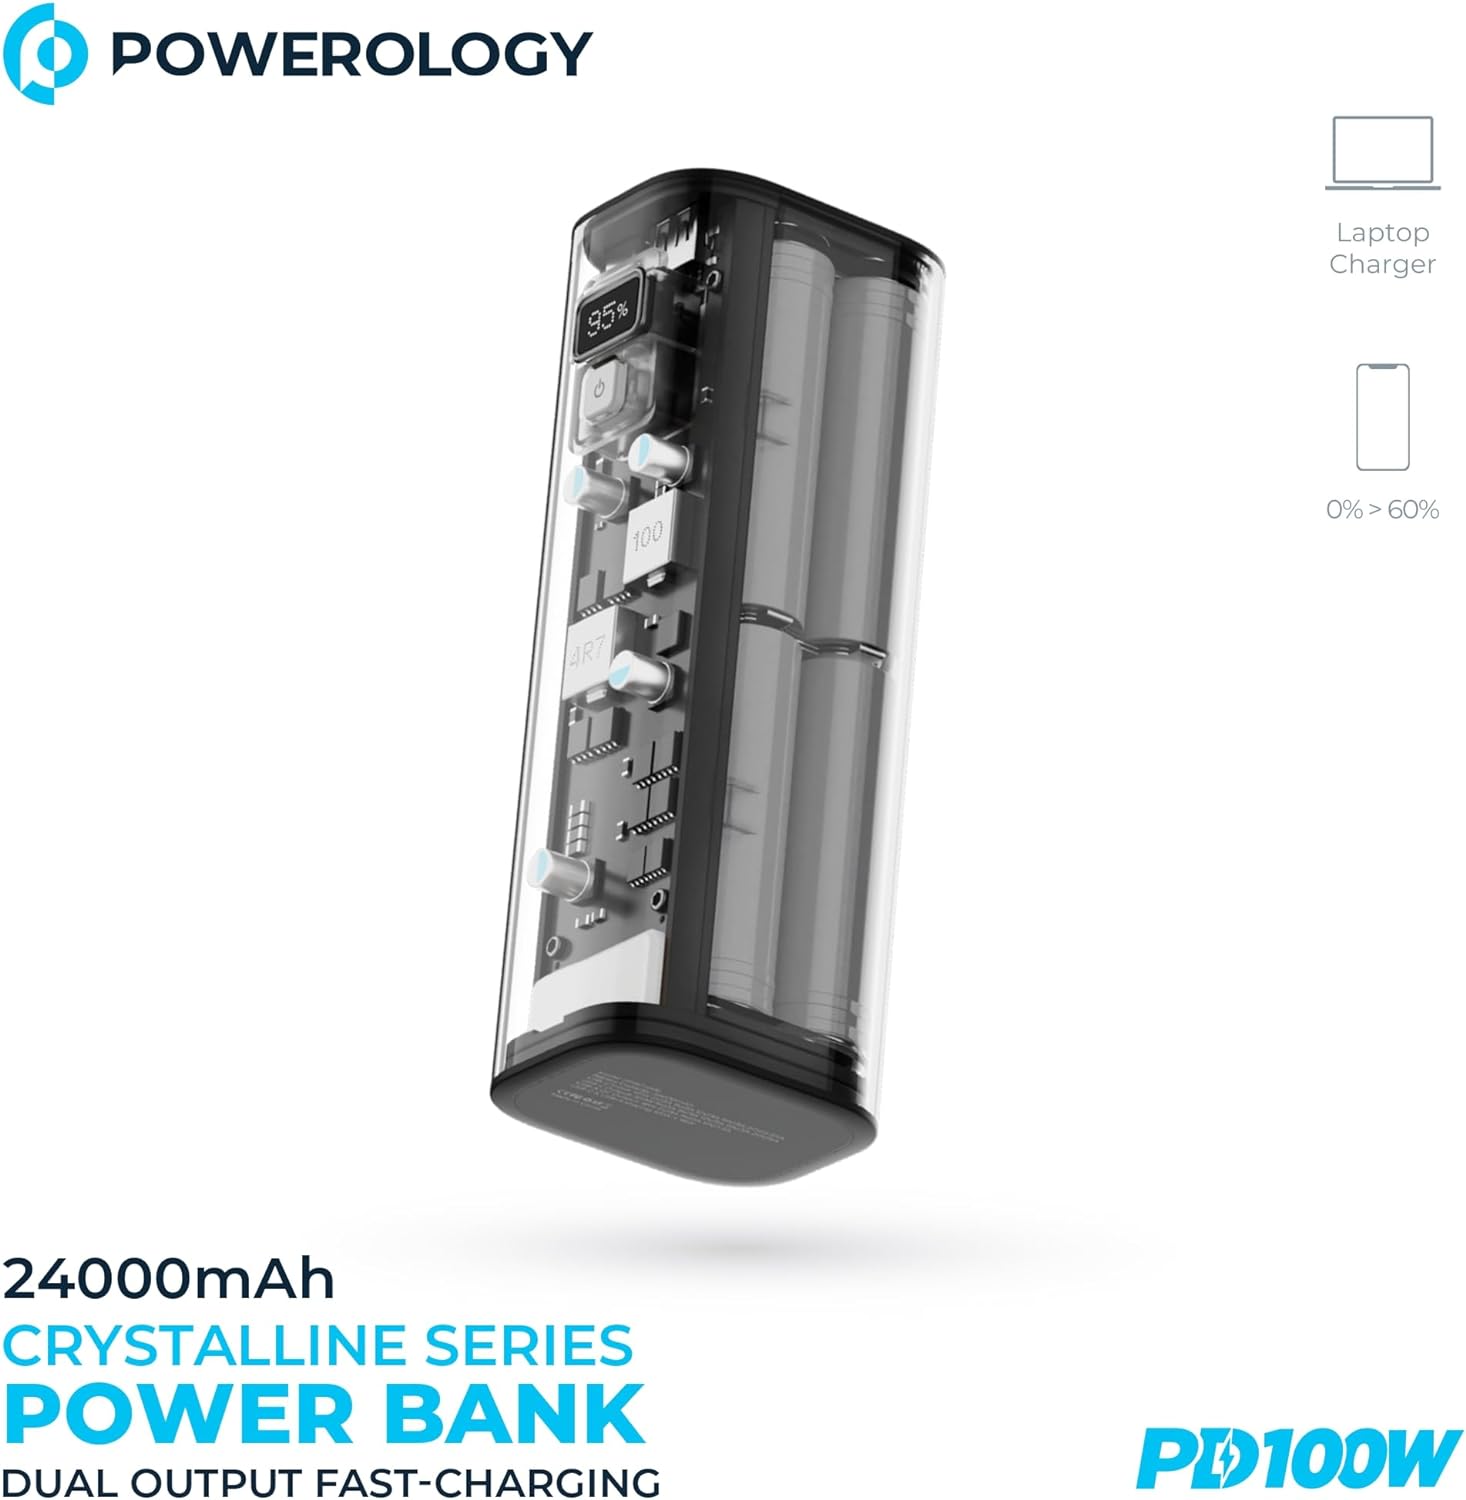 Powerology 24000mAh Crystalline Series Power Bank